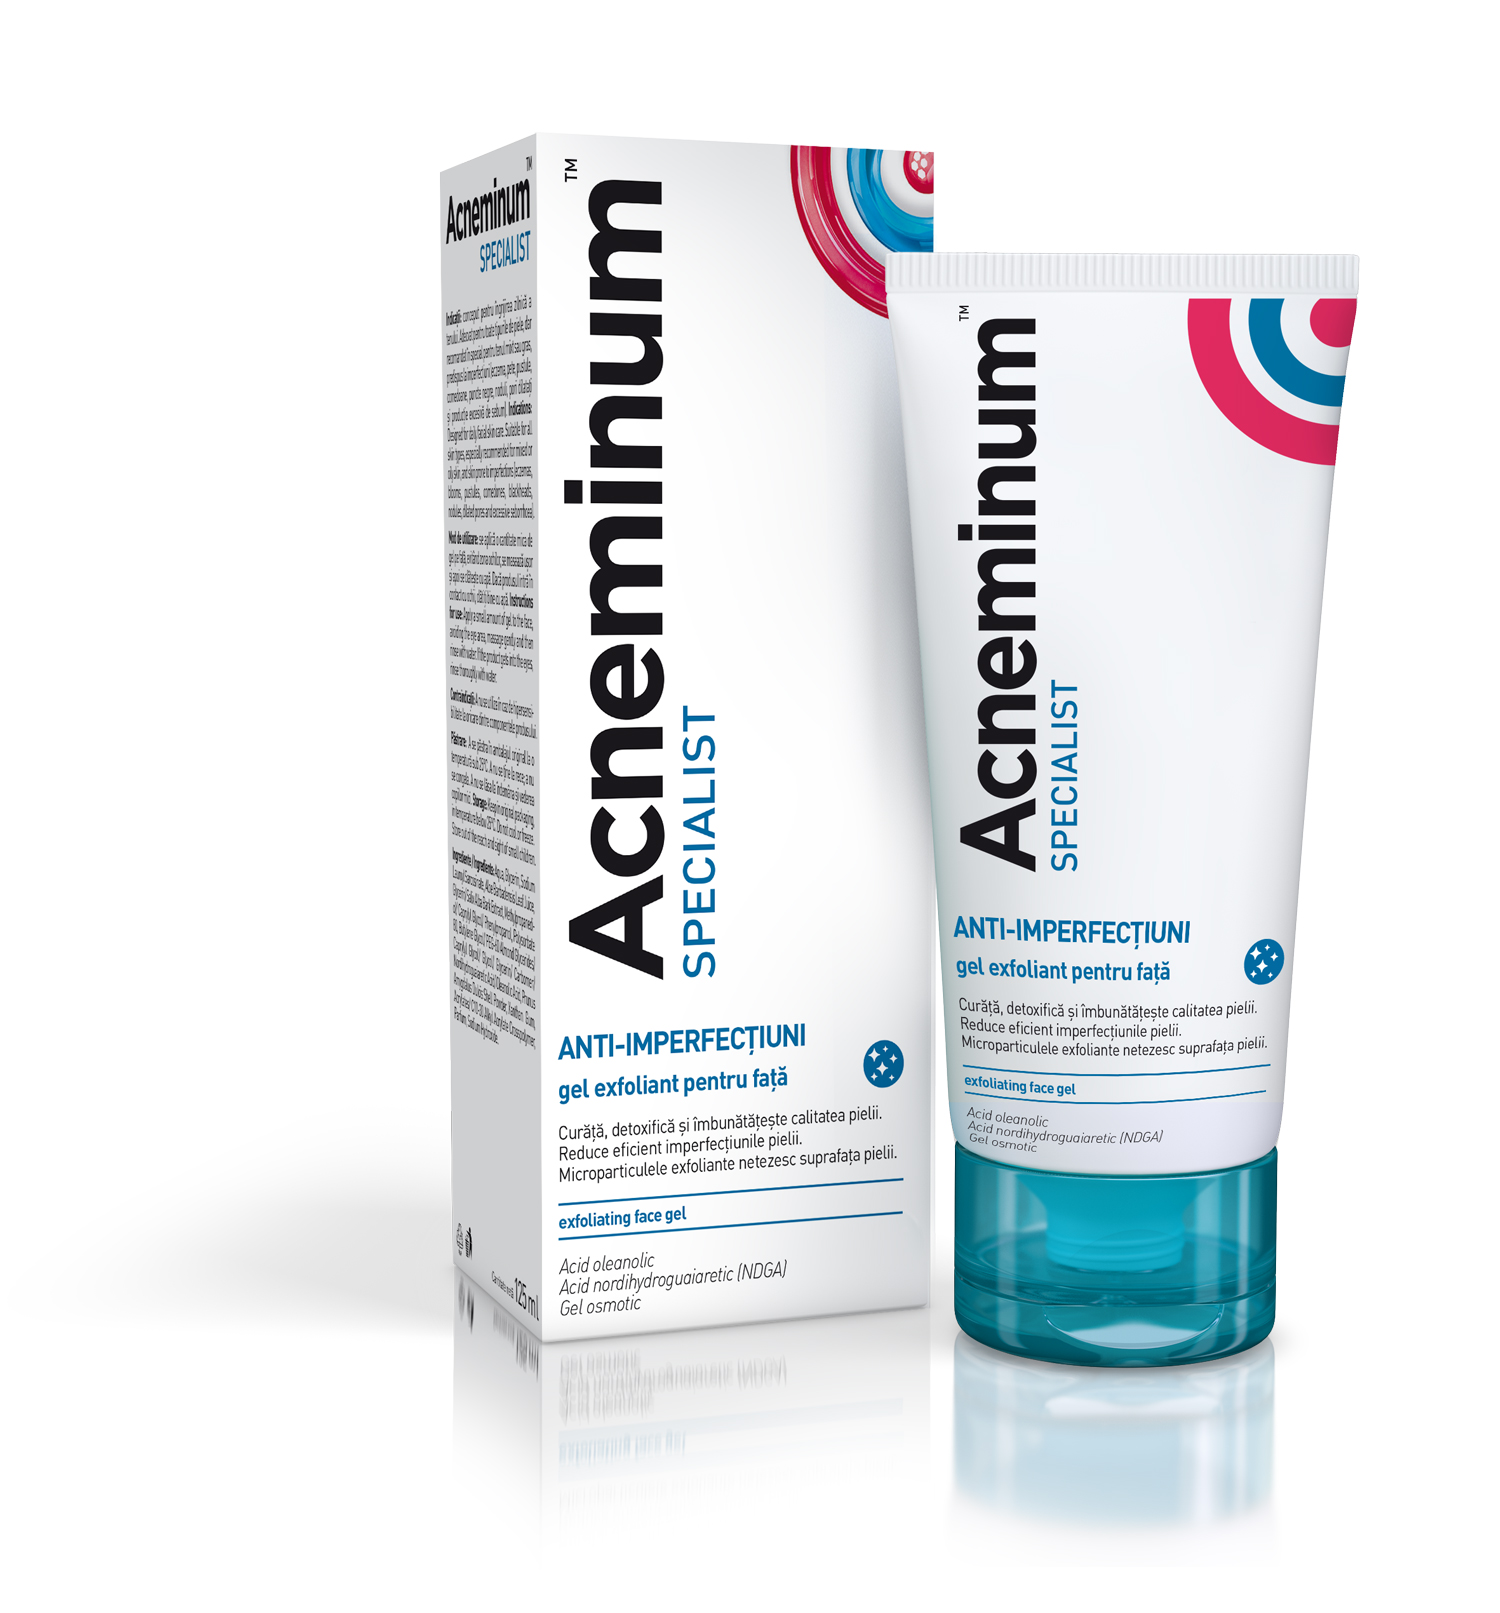 Piele cu probleme - Acneminum gel de fata exfoliant 125ml, epastila.ro